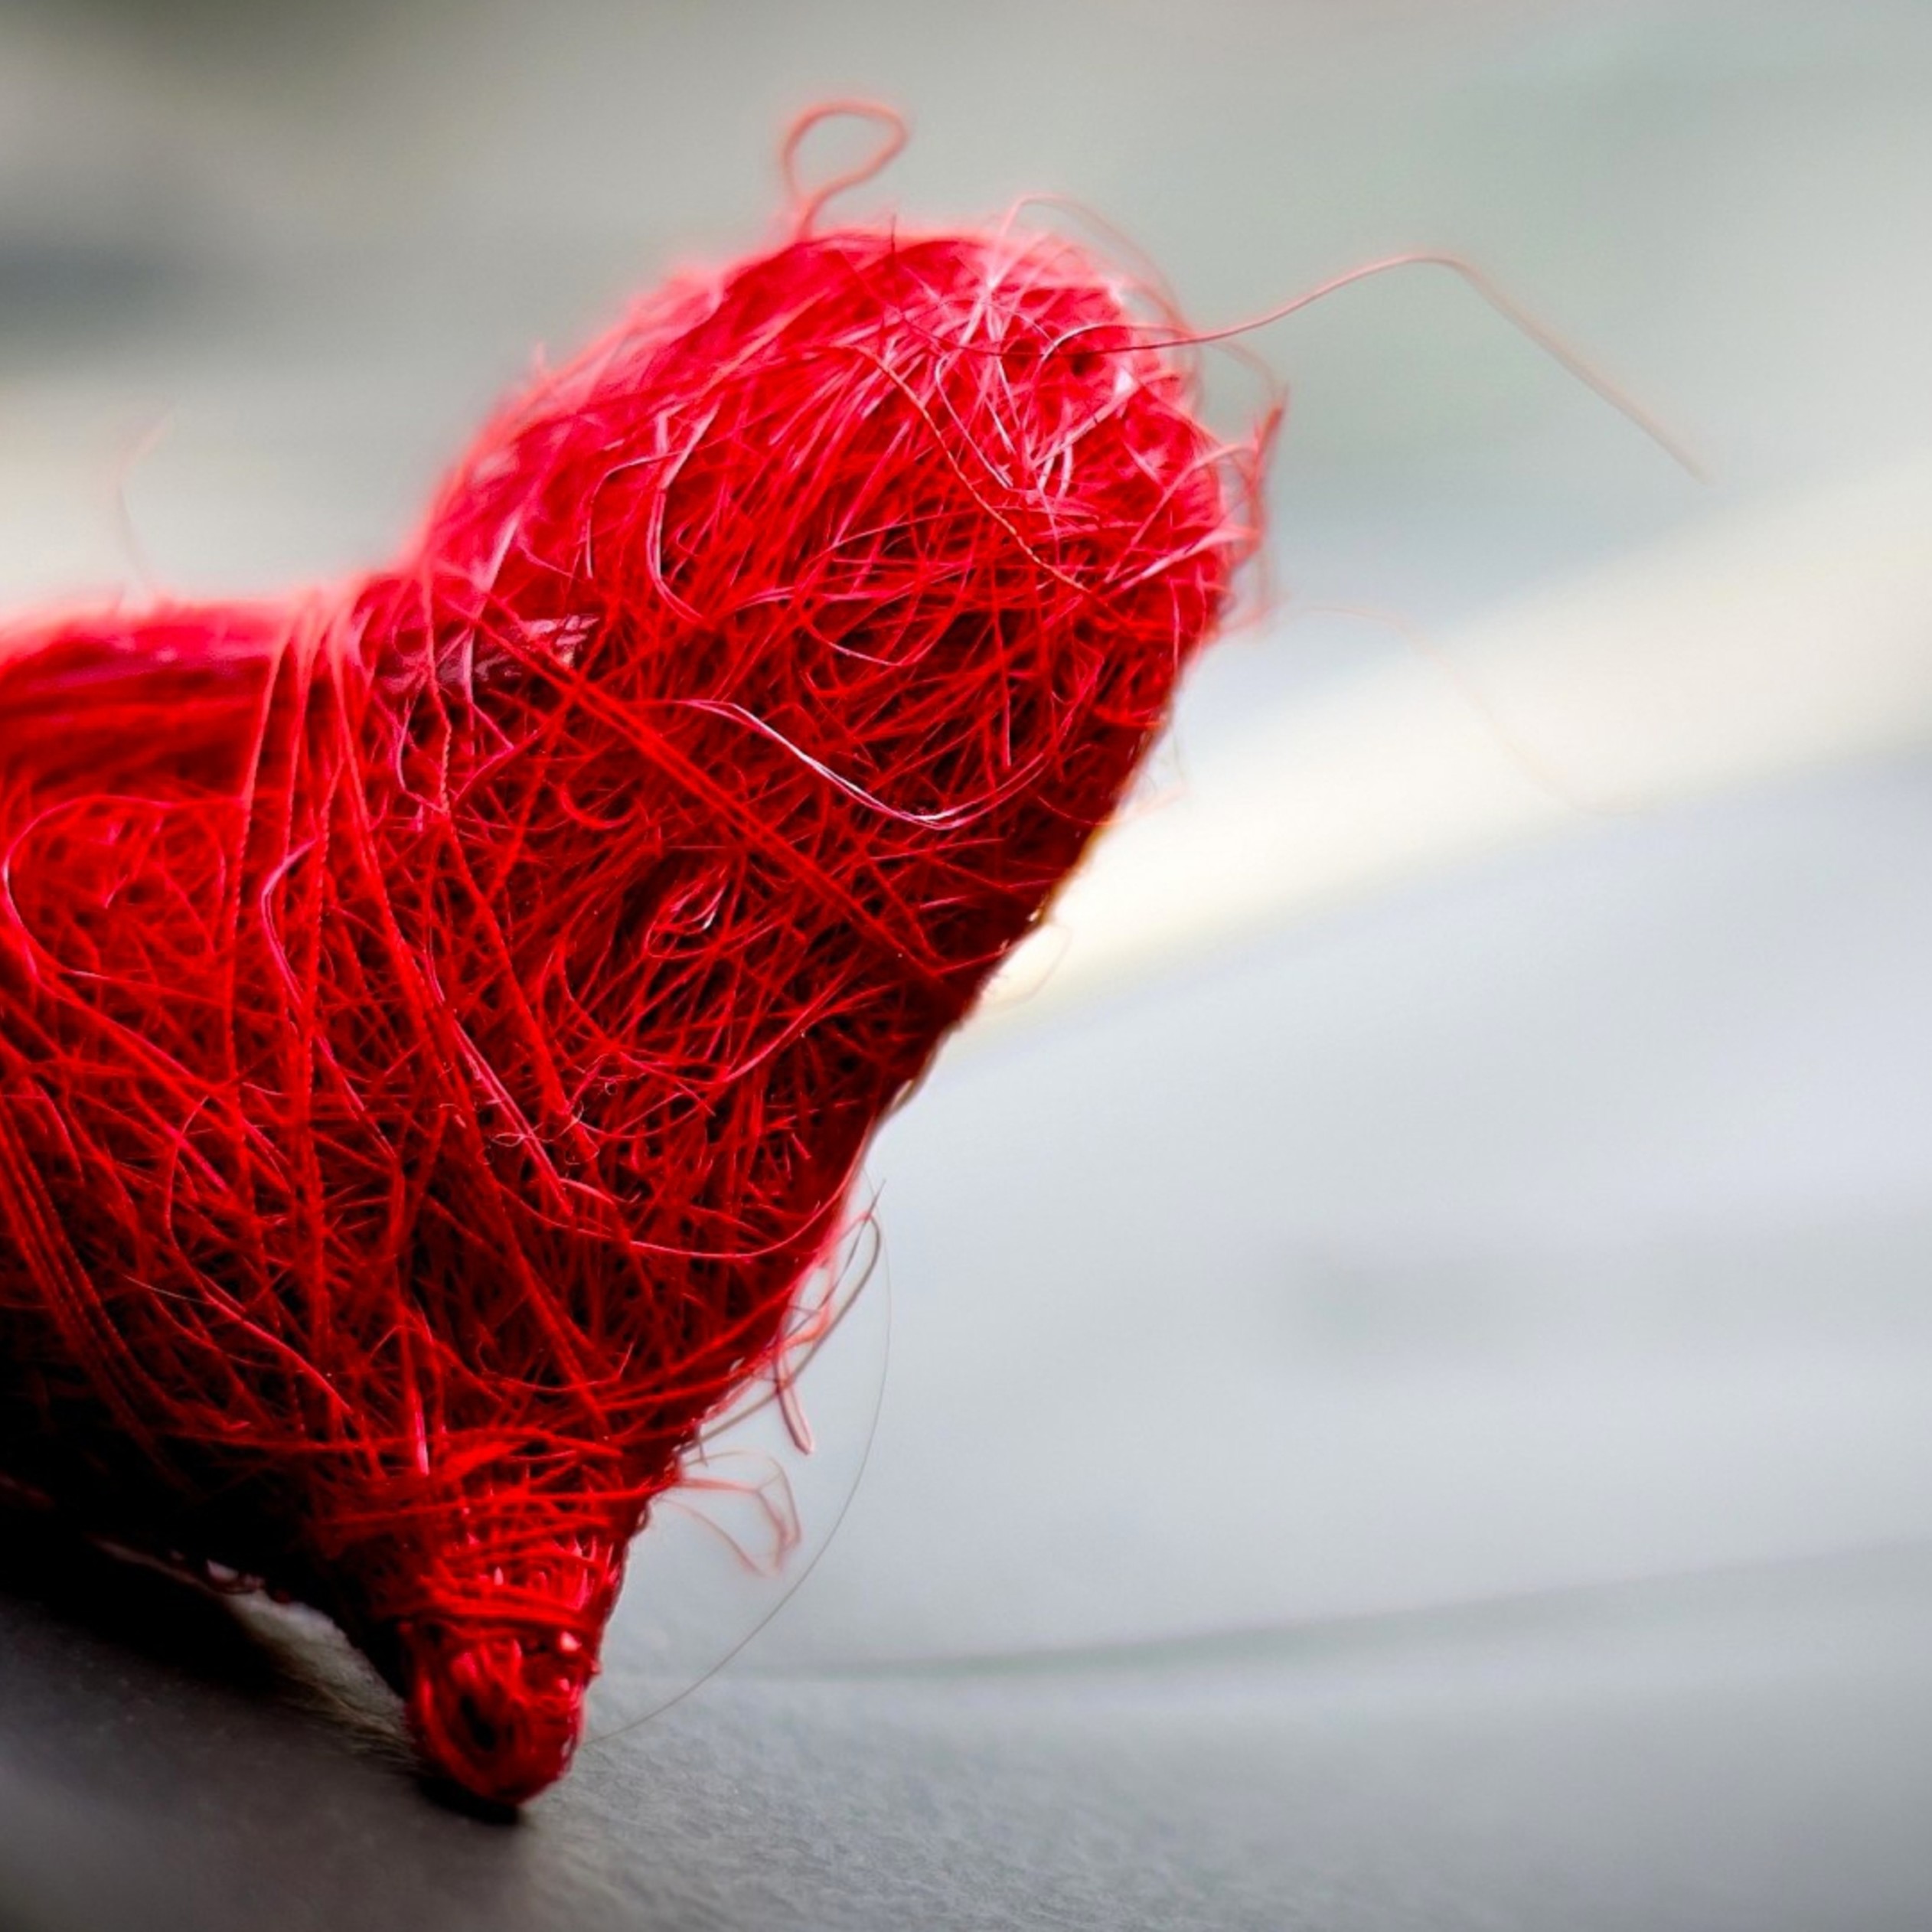 A heart made of red thread - Love wallpaper Wallpaper Download 2524x2524